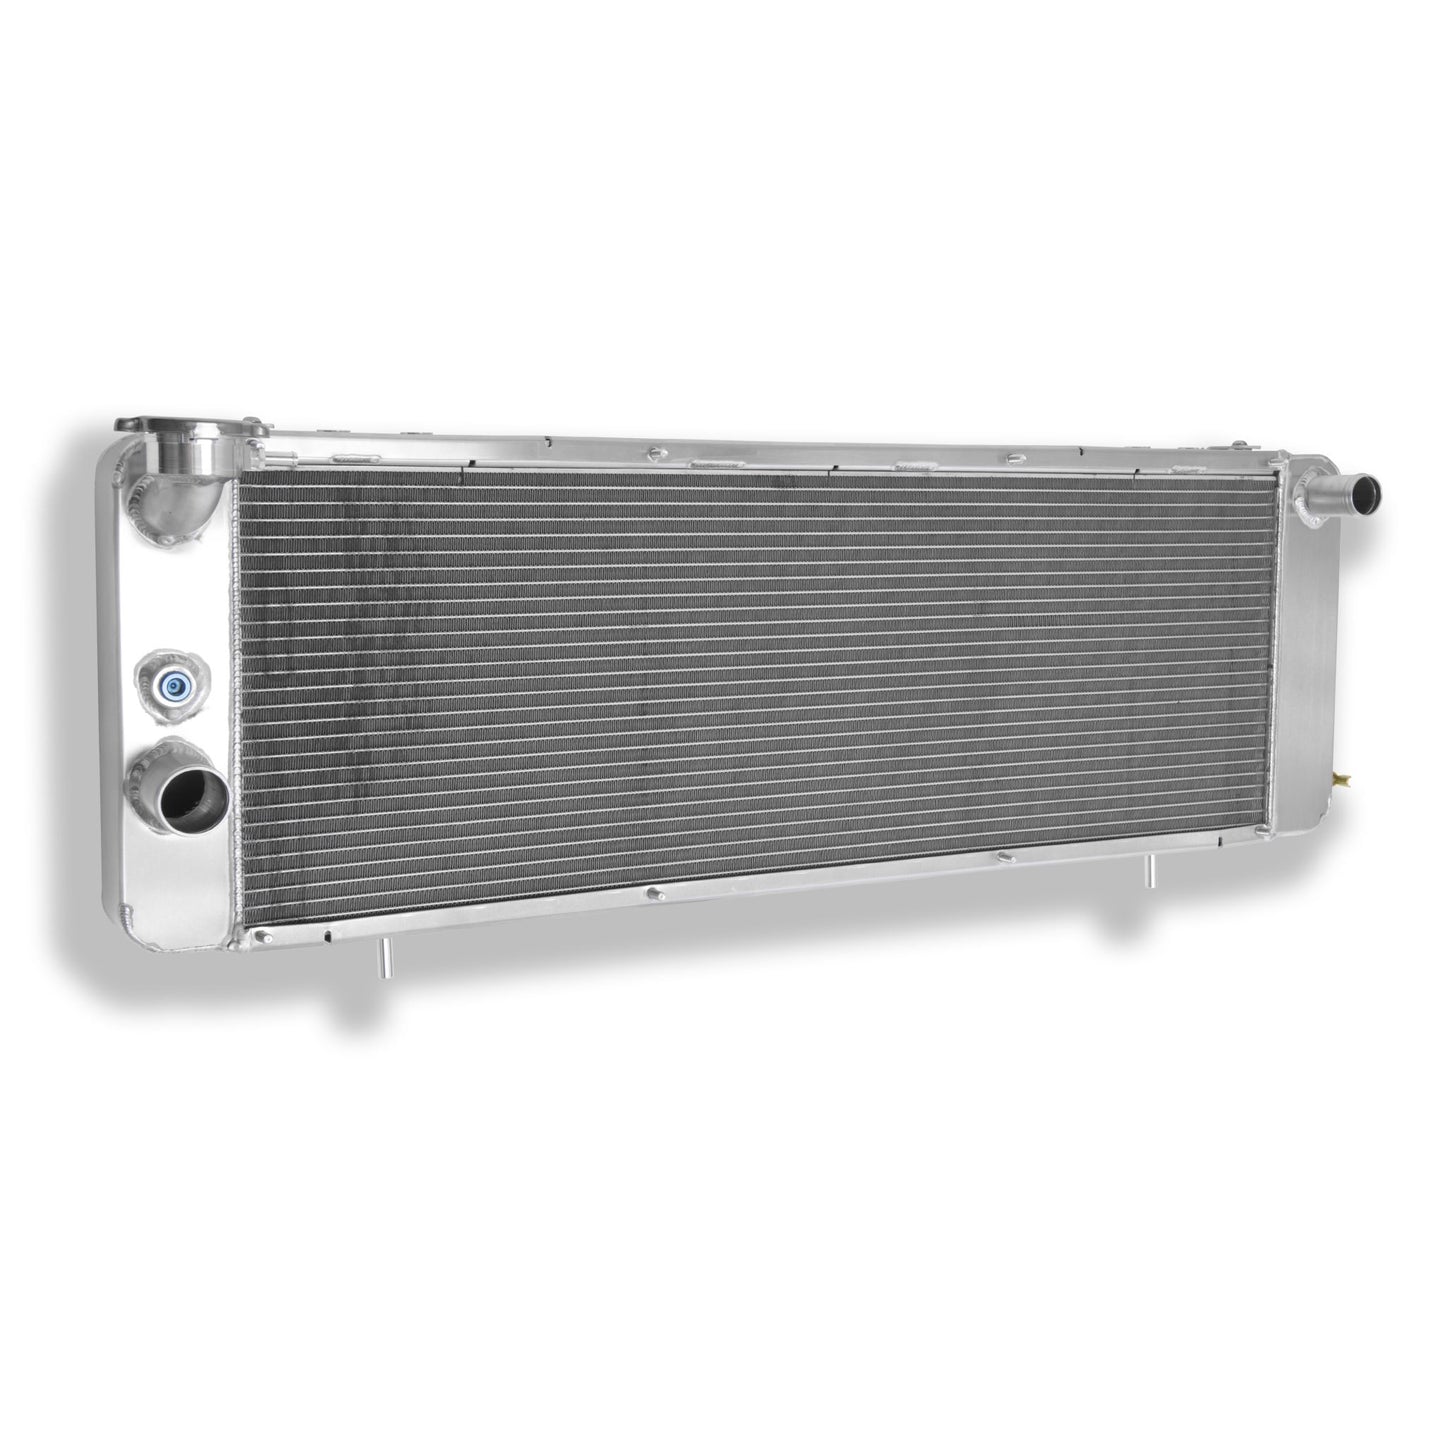 Flex-A-Lite - Extruded Core Radiator 315900